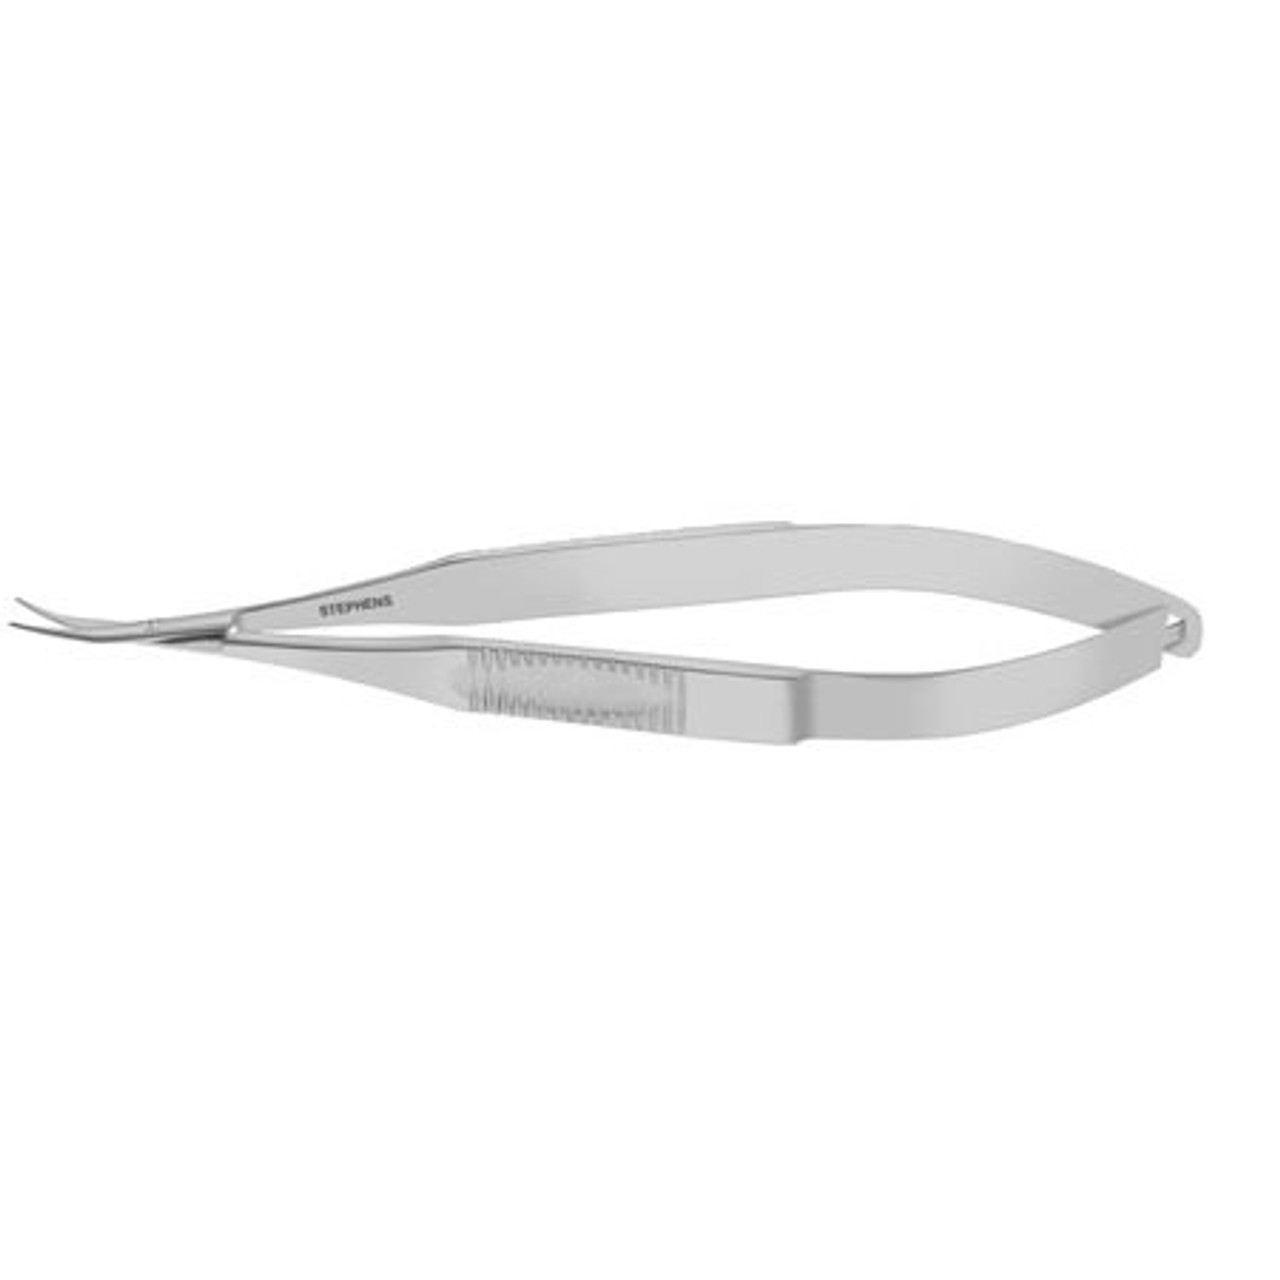 Westcott Stitch Scissors Standard Blades, Extra Sharp Tips - S7